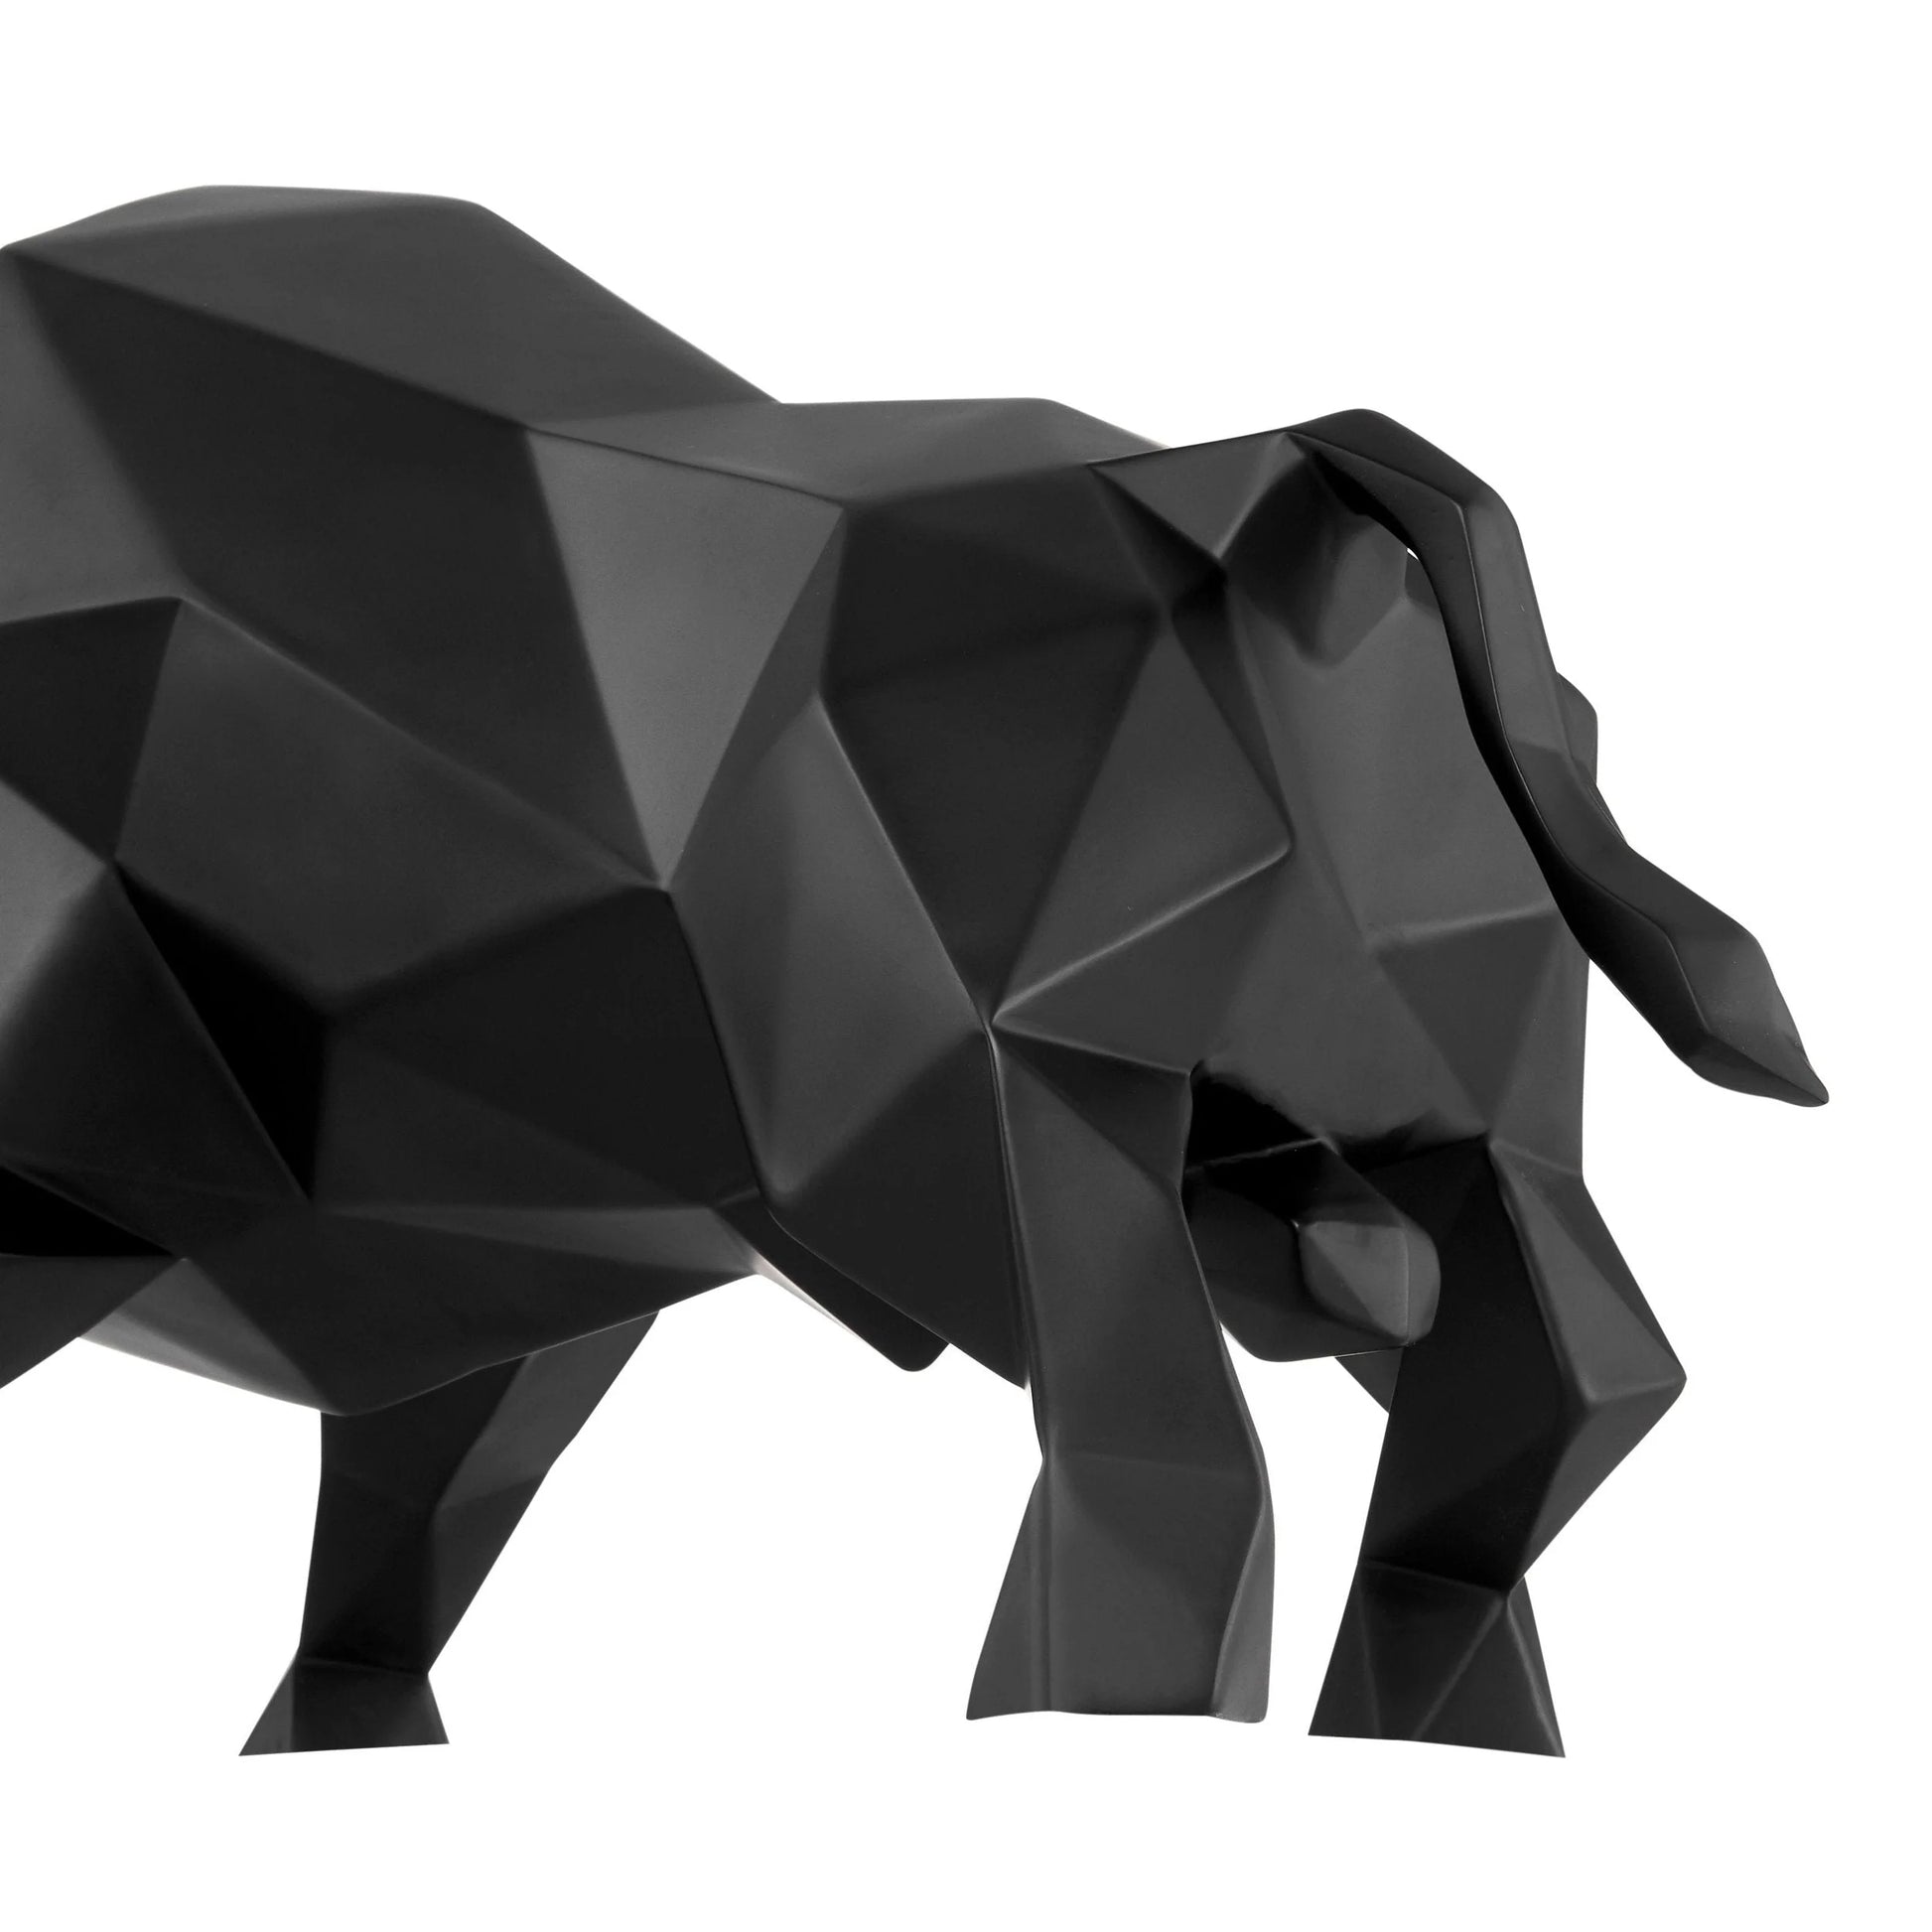 Finesse Decor Geometric Bull Sculpture - Matte Black 4